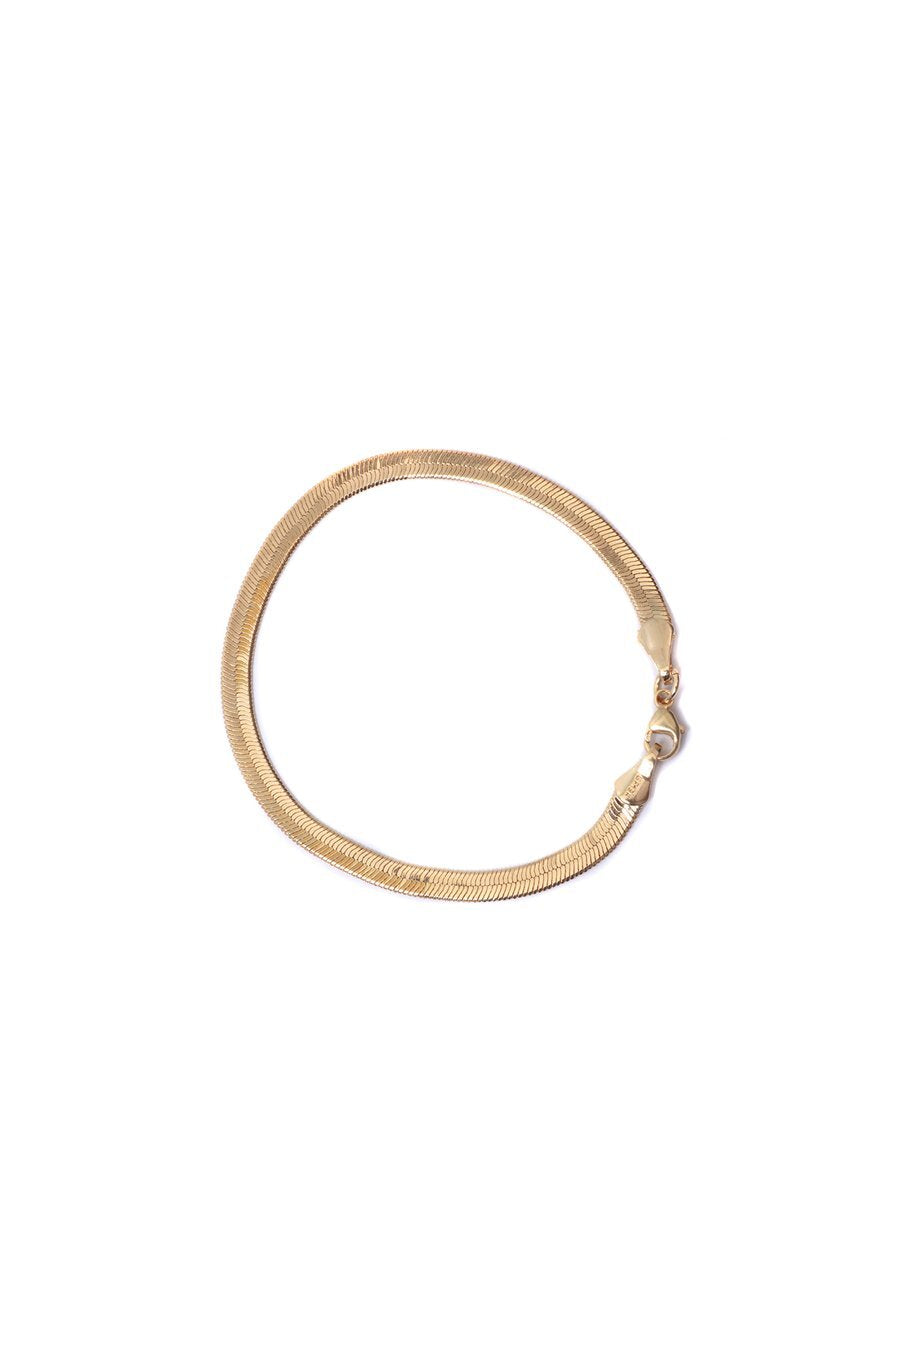 Herringbone Chain Bracelet Gold